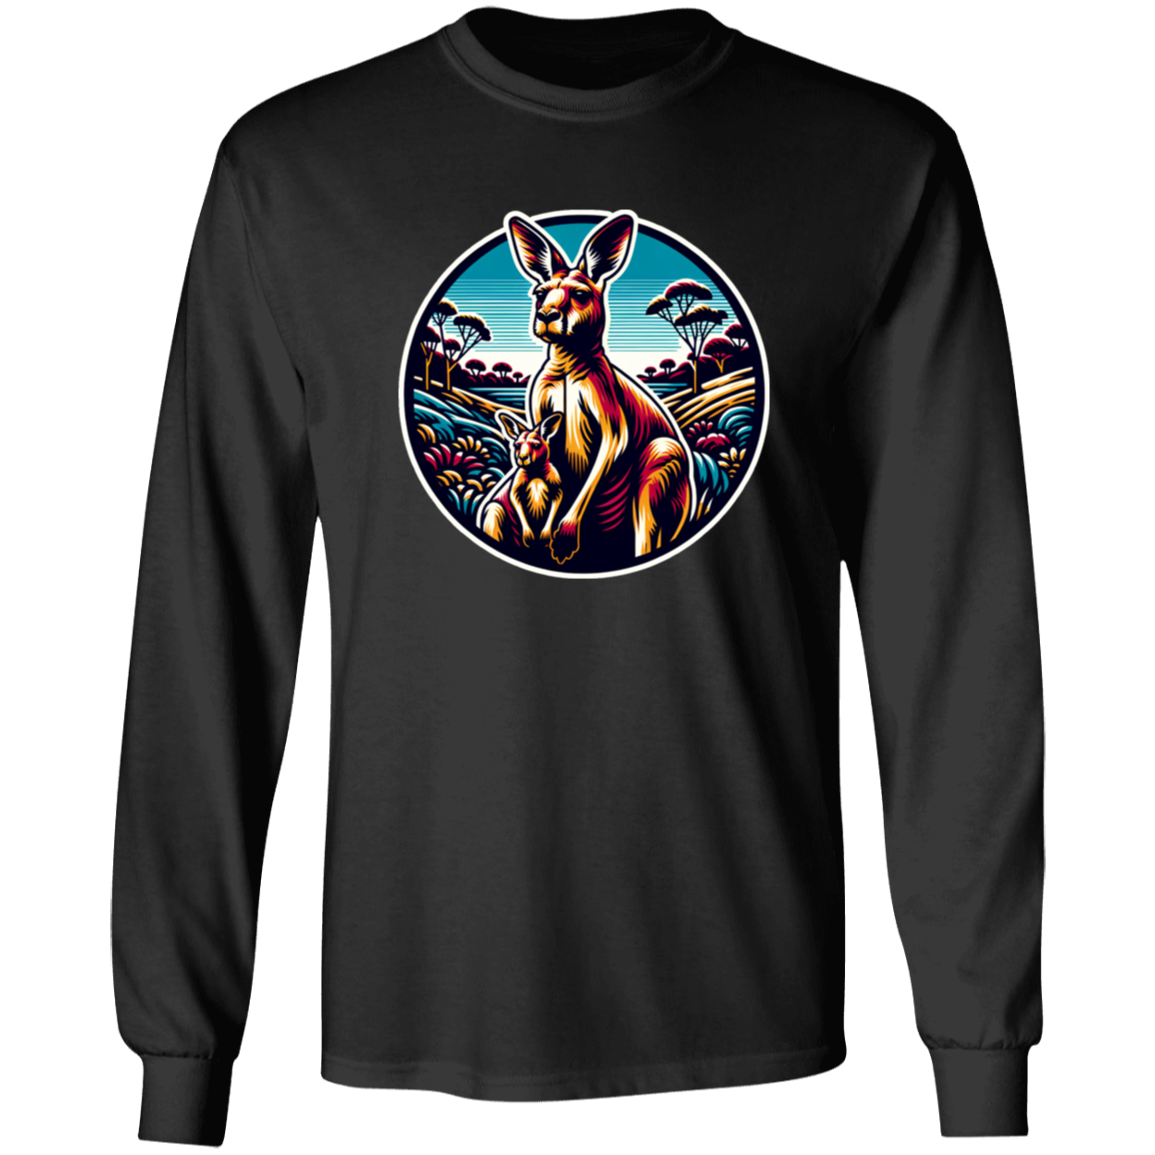 Kangaroo and Joey Graphic - T-shirts, Hoodies and Sweatshirts